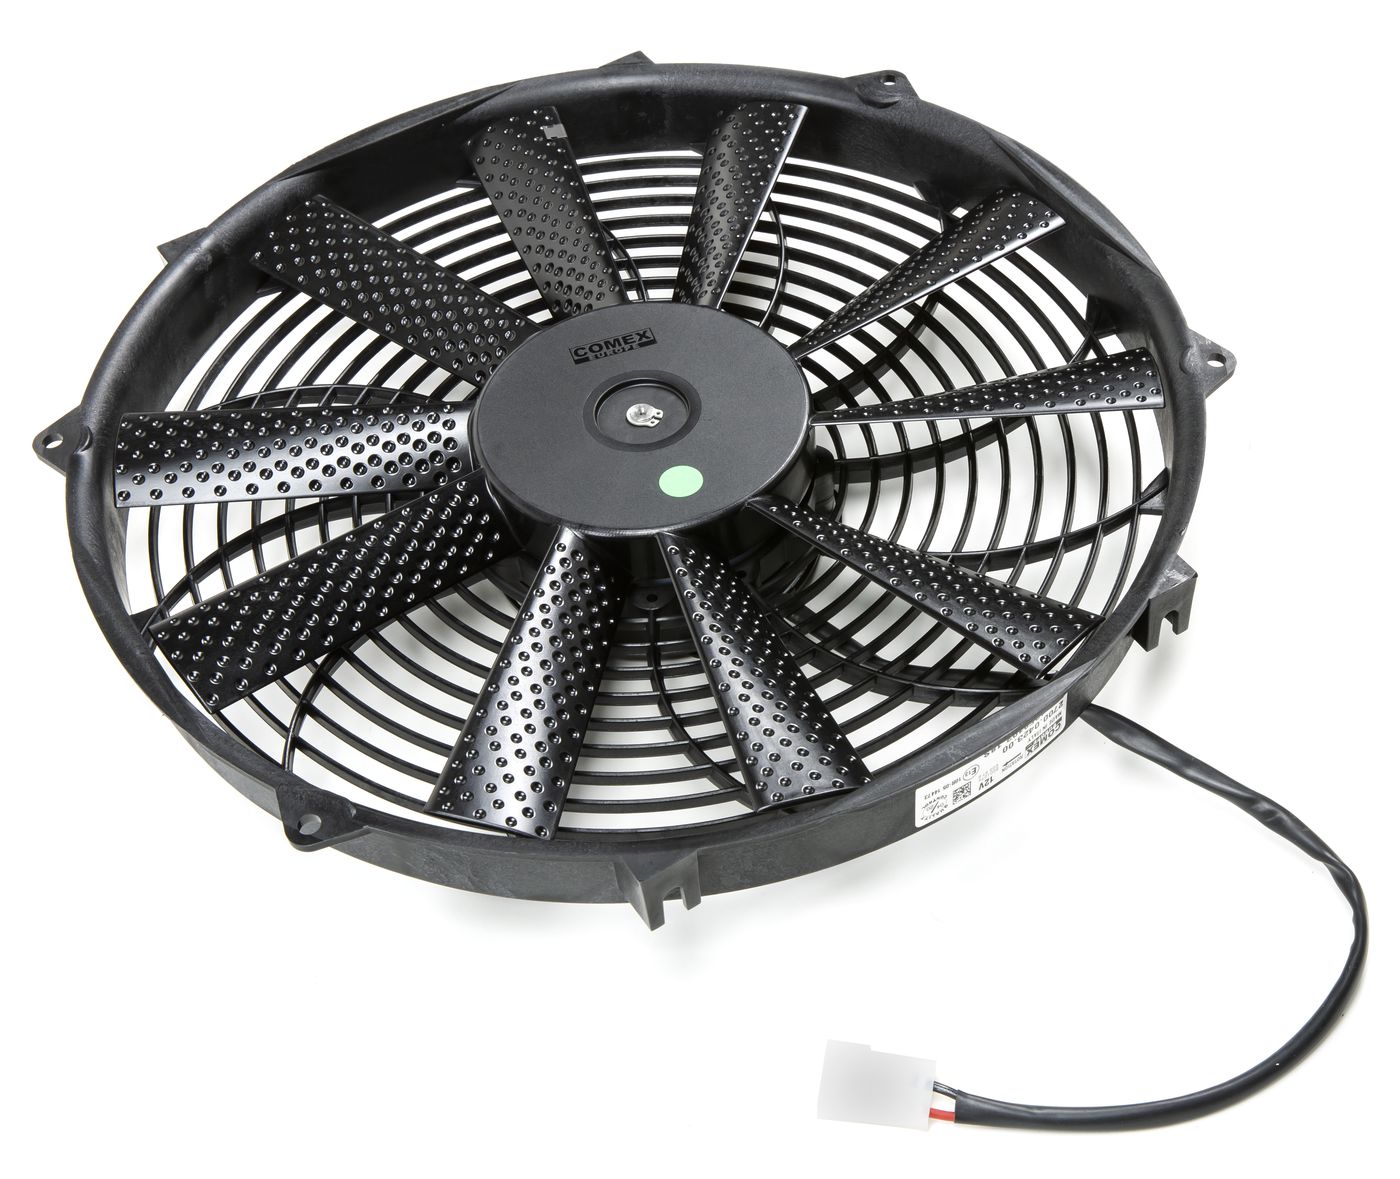 Elektrolüfter
Electric fan
Ventilateur électrique
Wentylator e